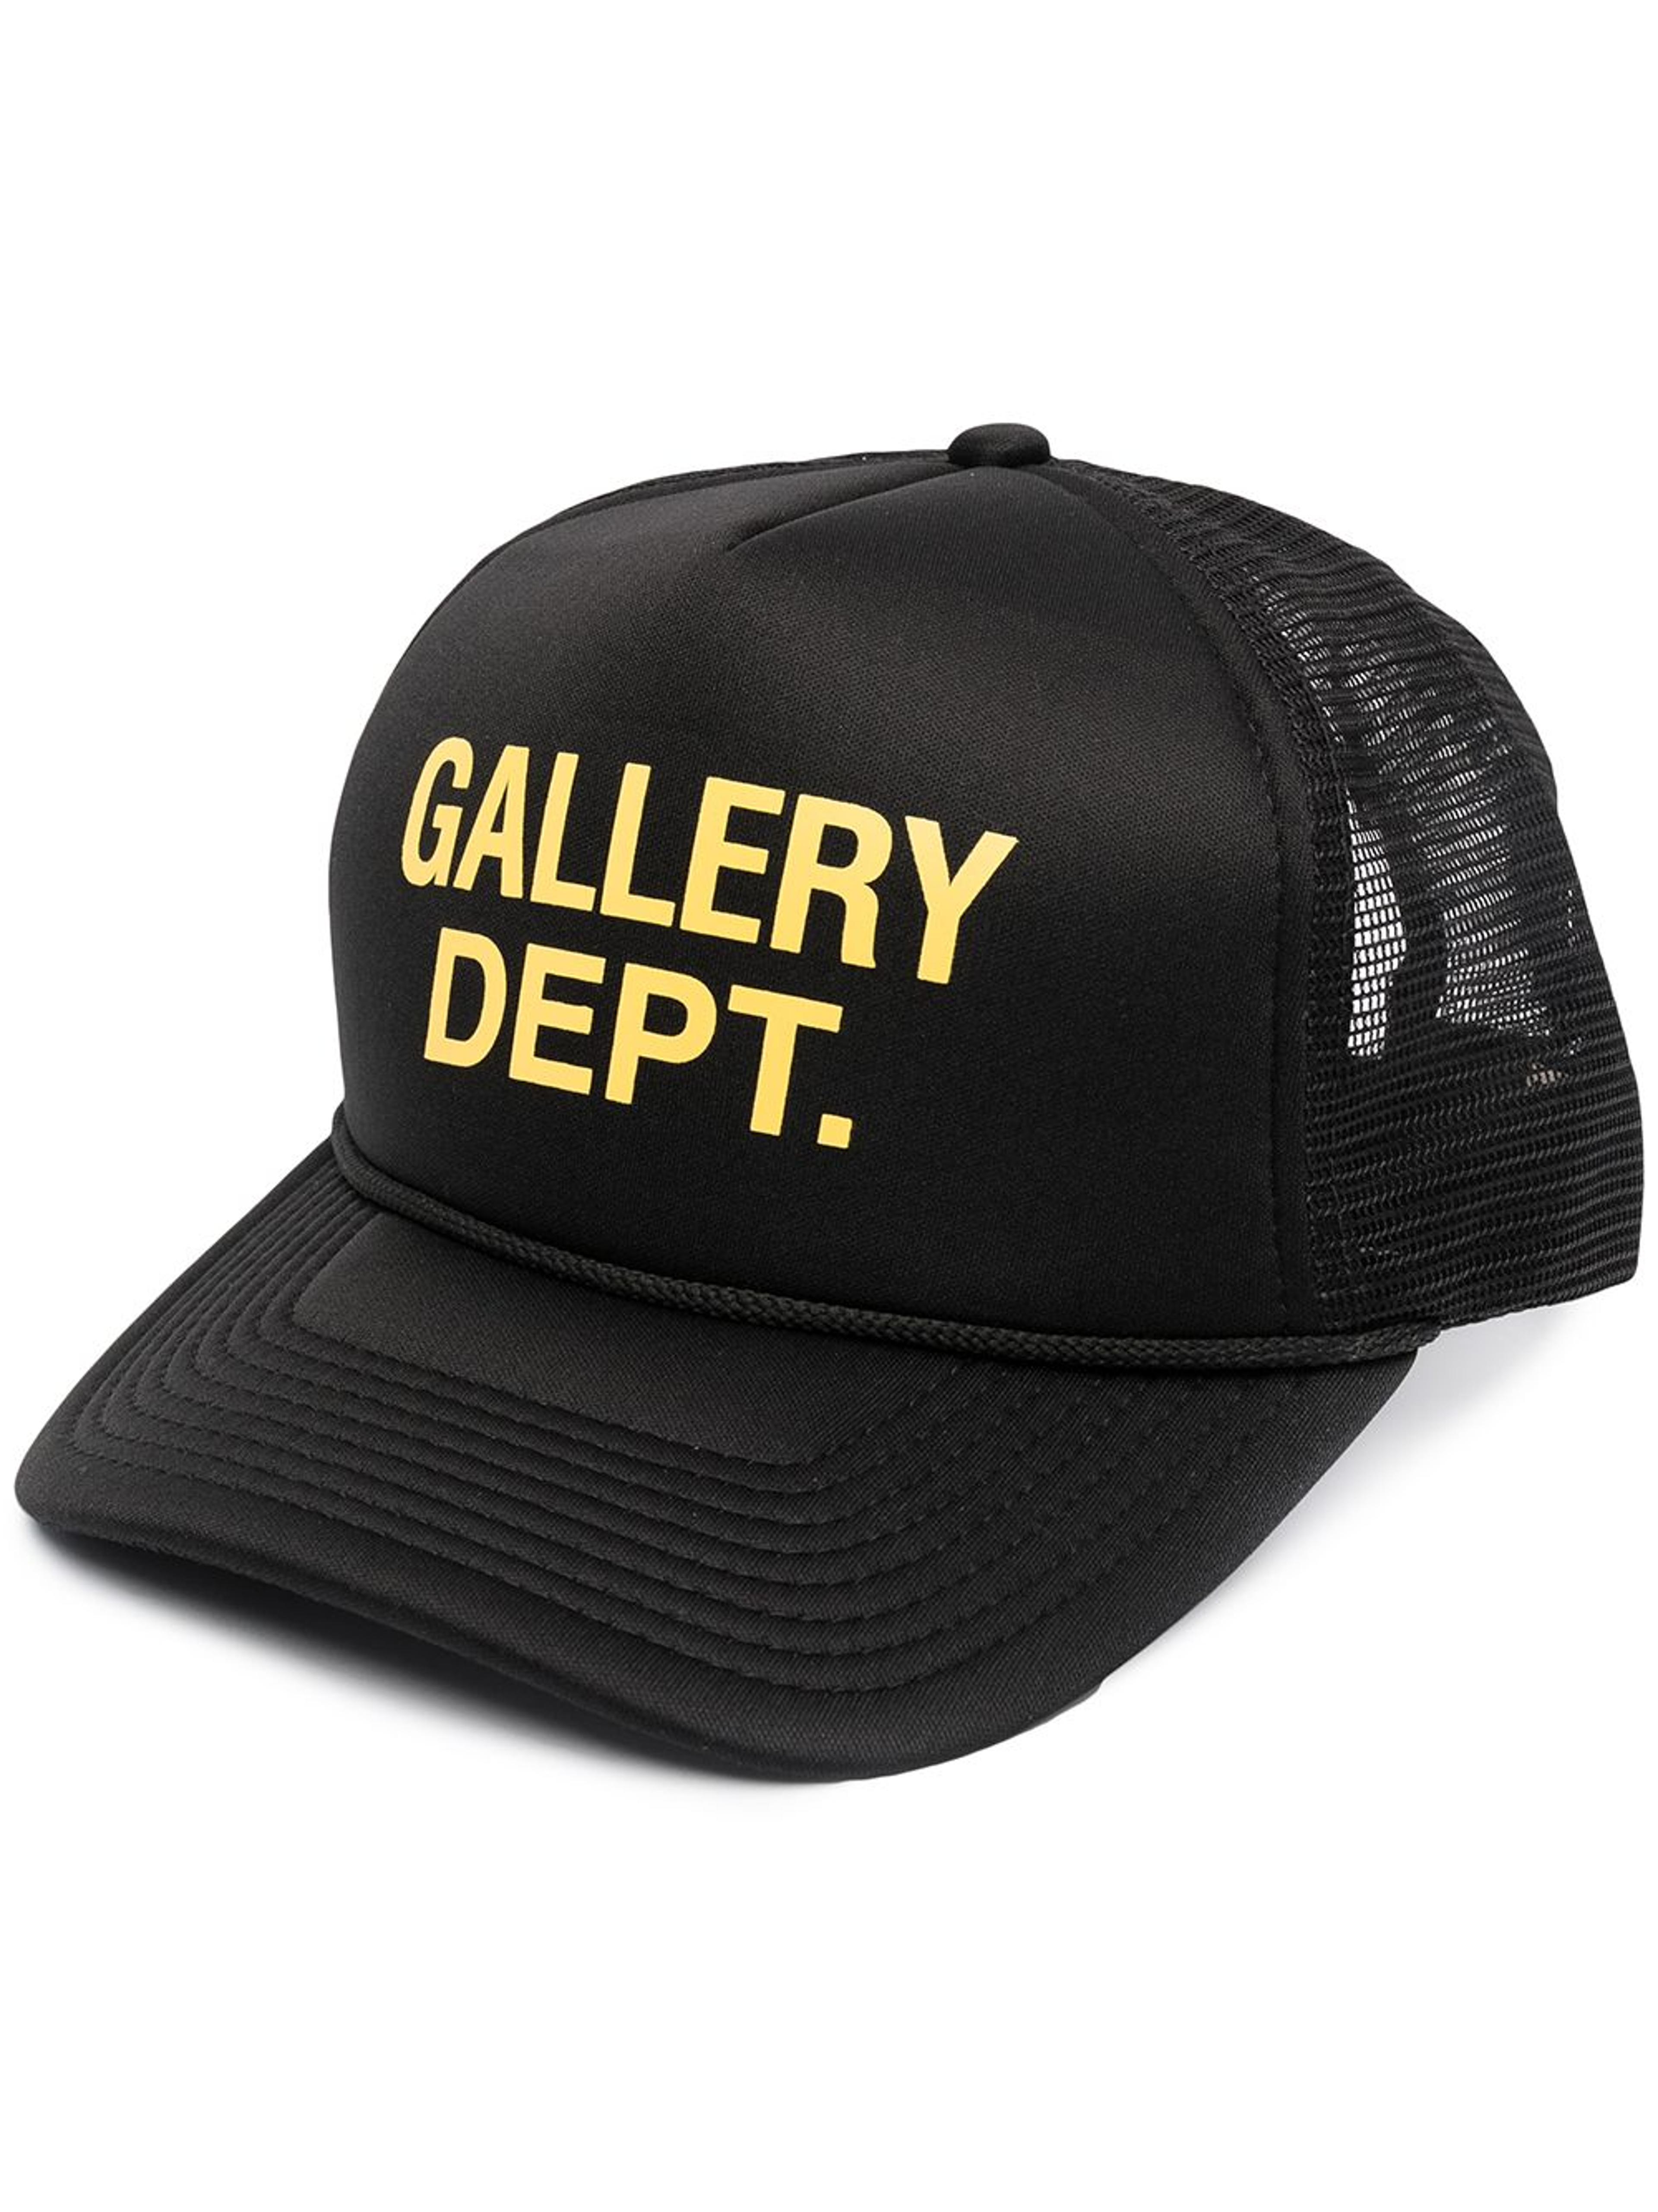 Gallery Dept. Logo Trucker Hat